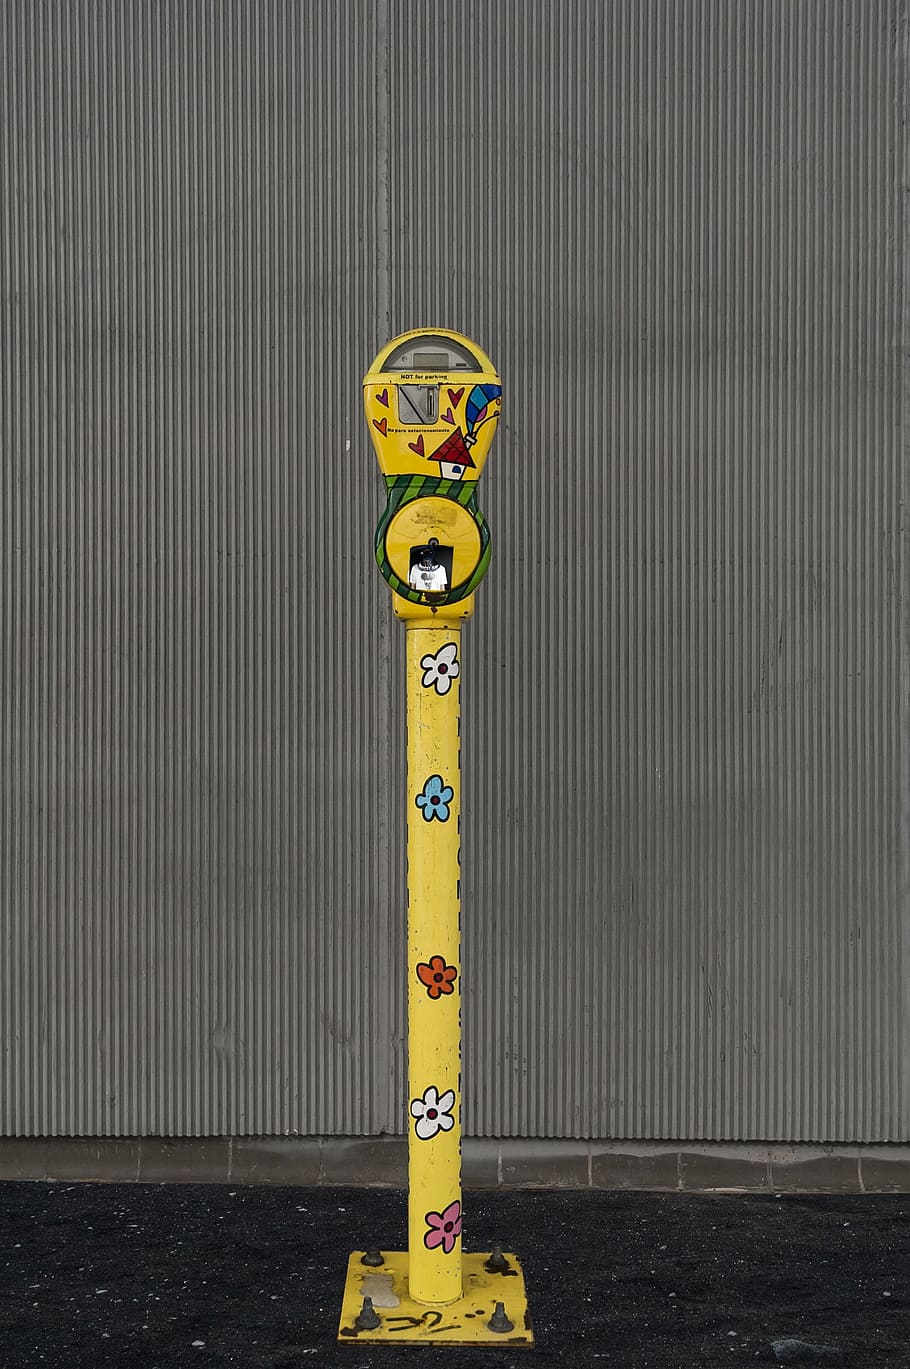 street, parking meter, meter, car, yellow, metal, outdoors, day, corrugated iron, text